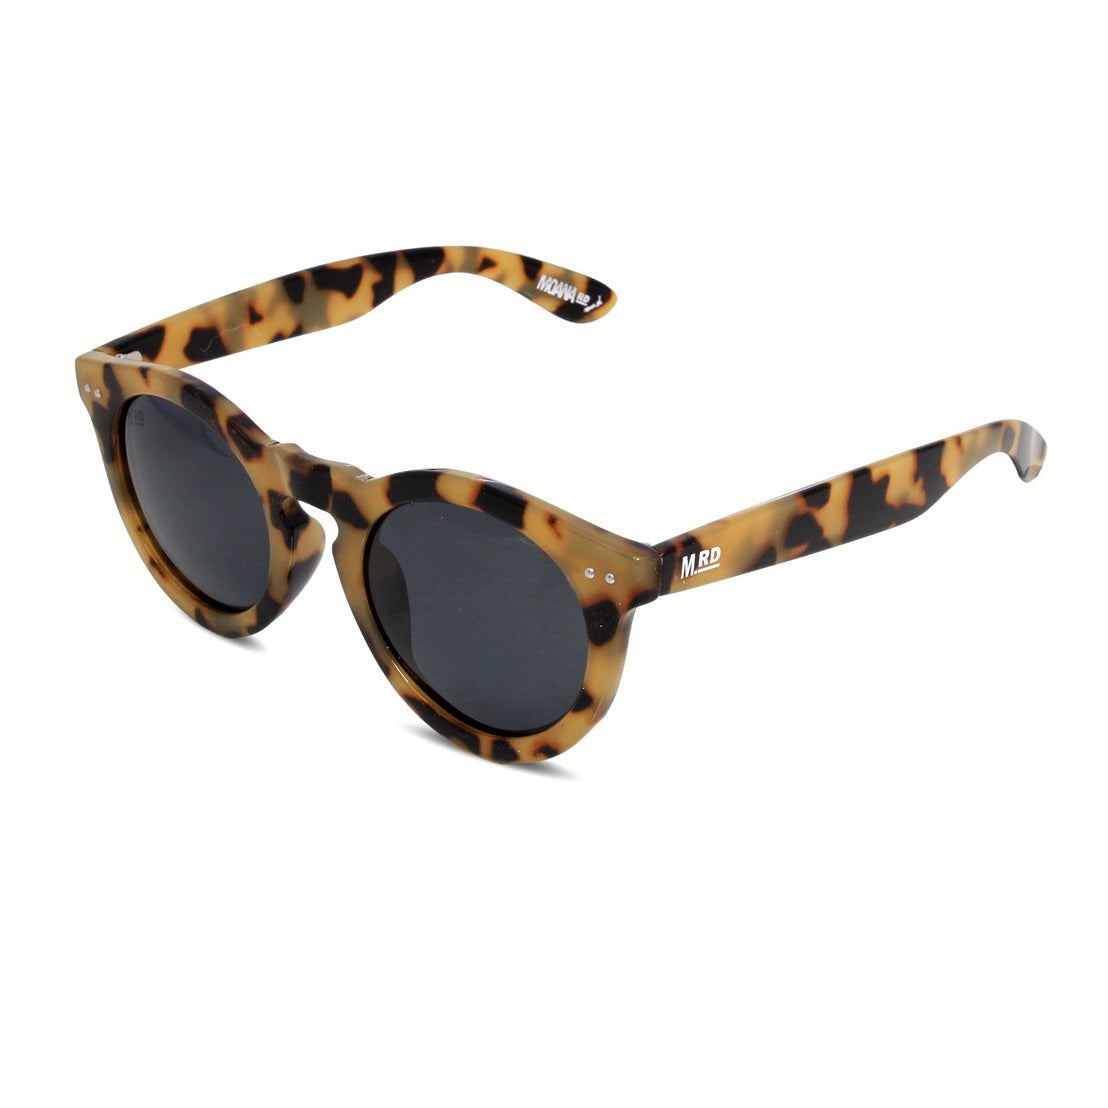 Grace Kelly Sunglasses - Yellow Tortoiseshell | Moana Road Online ...